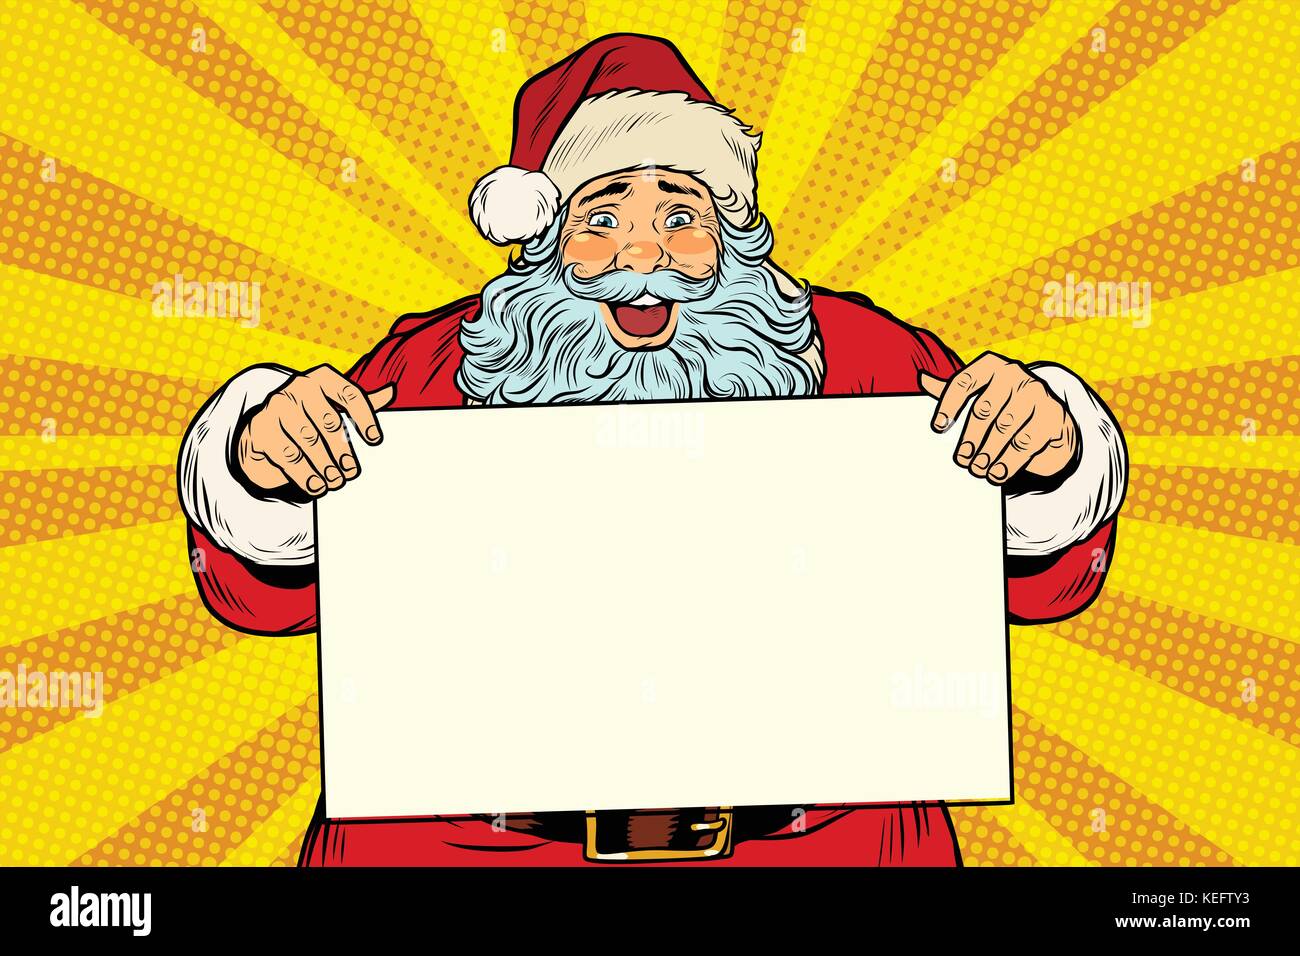 Freudige Santa Claus mit Plakat Vorlage Stock Vektor